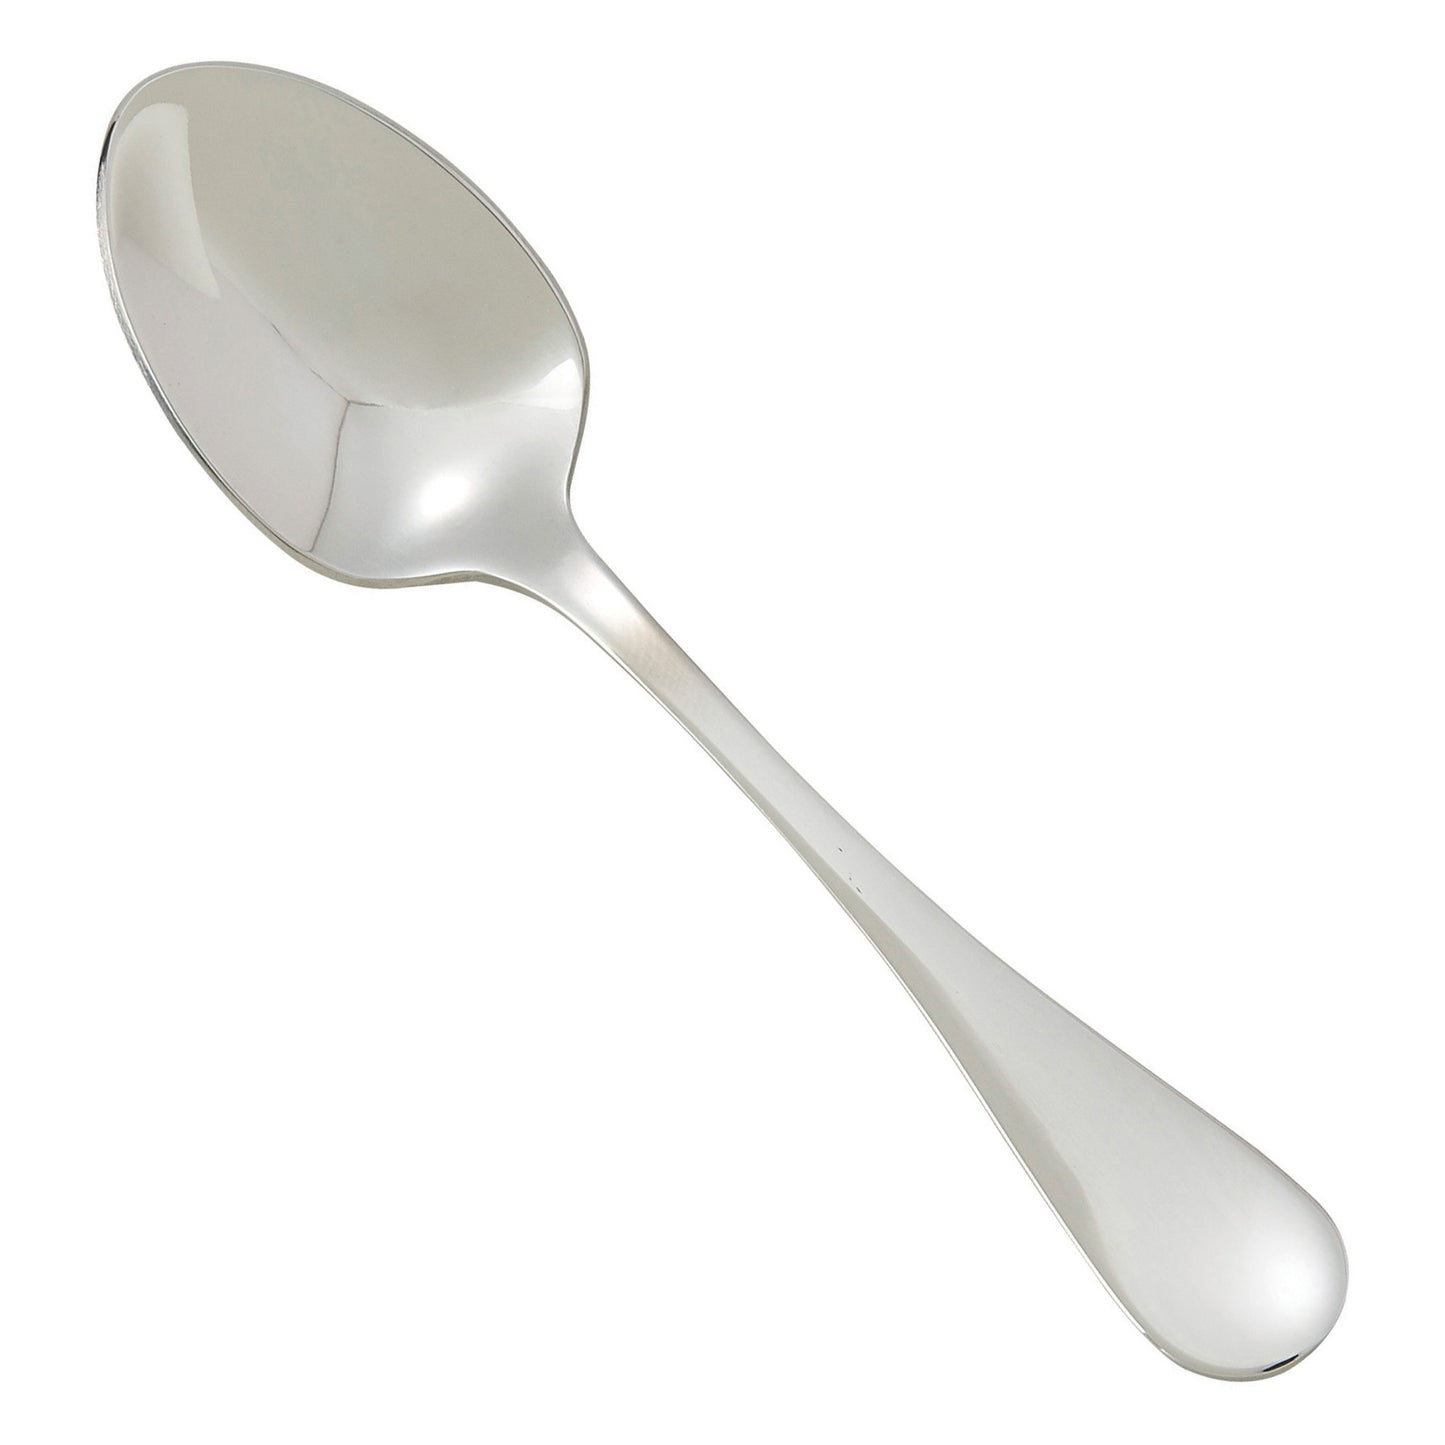 0037-09 - Venice Demitasse Spoon, 18/8 Extra Heavyweight